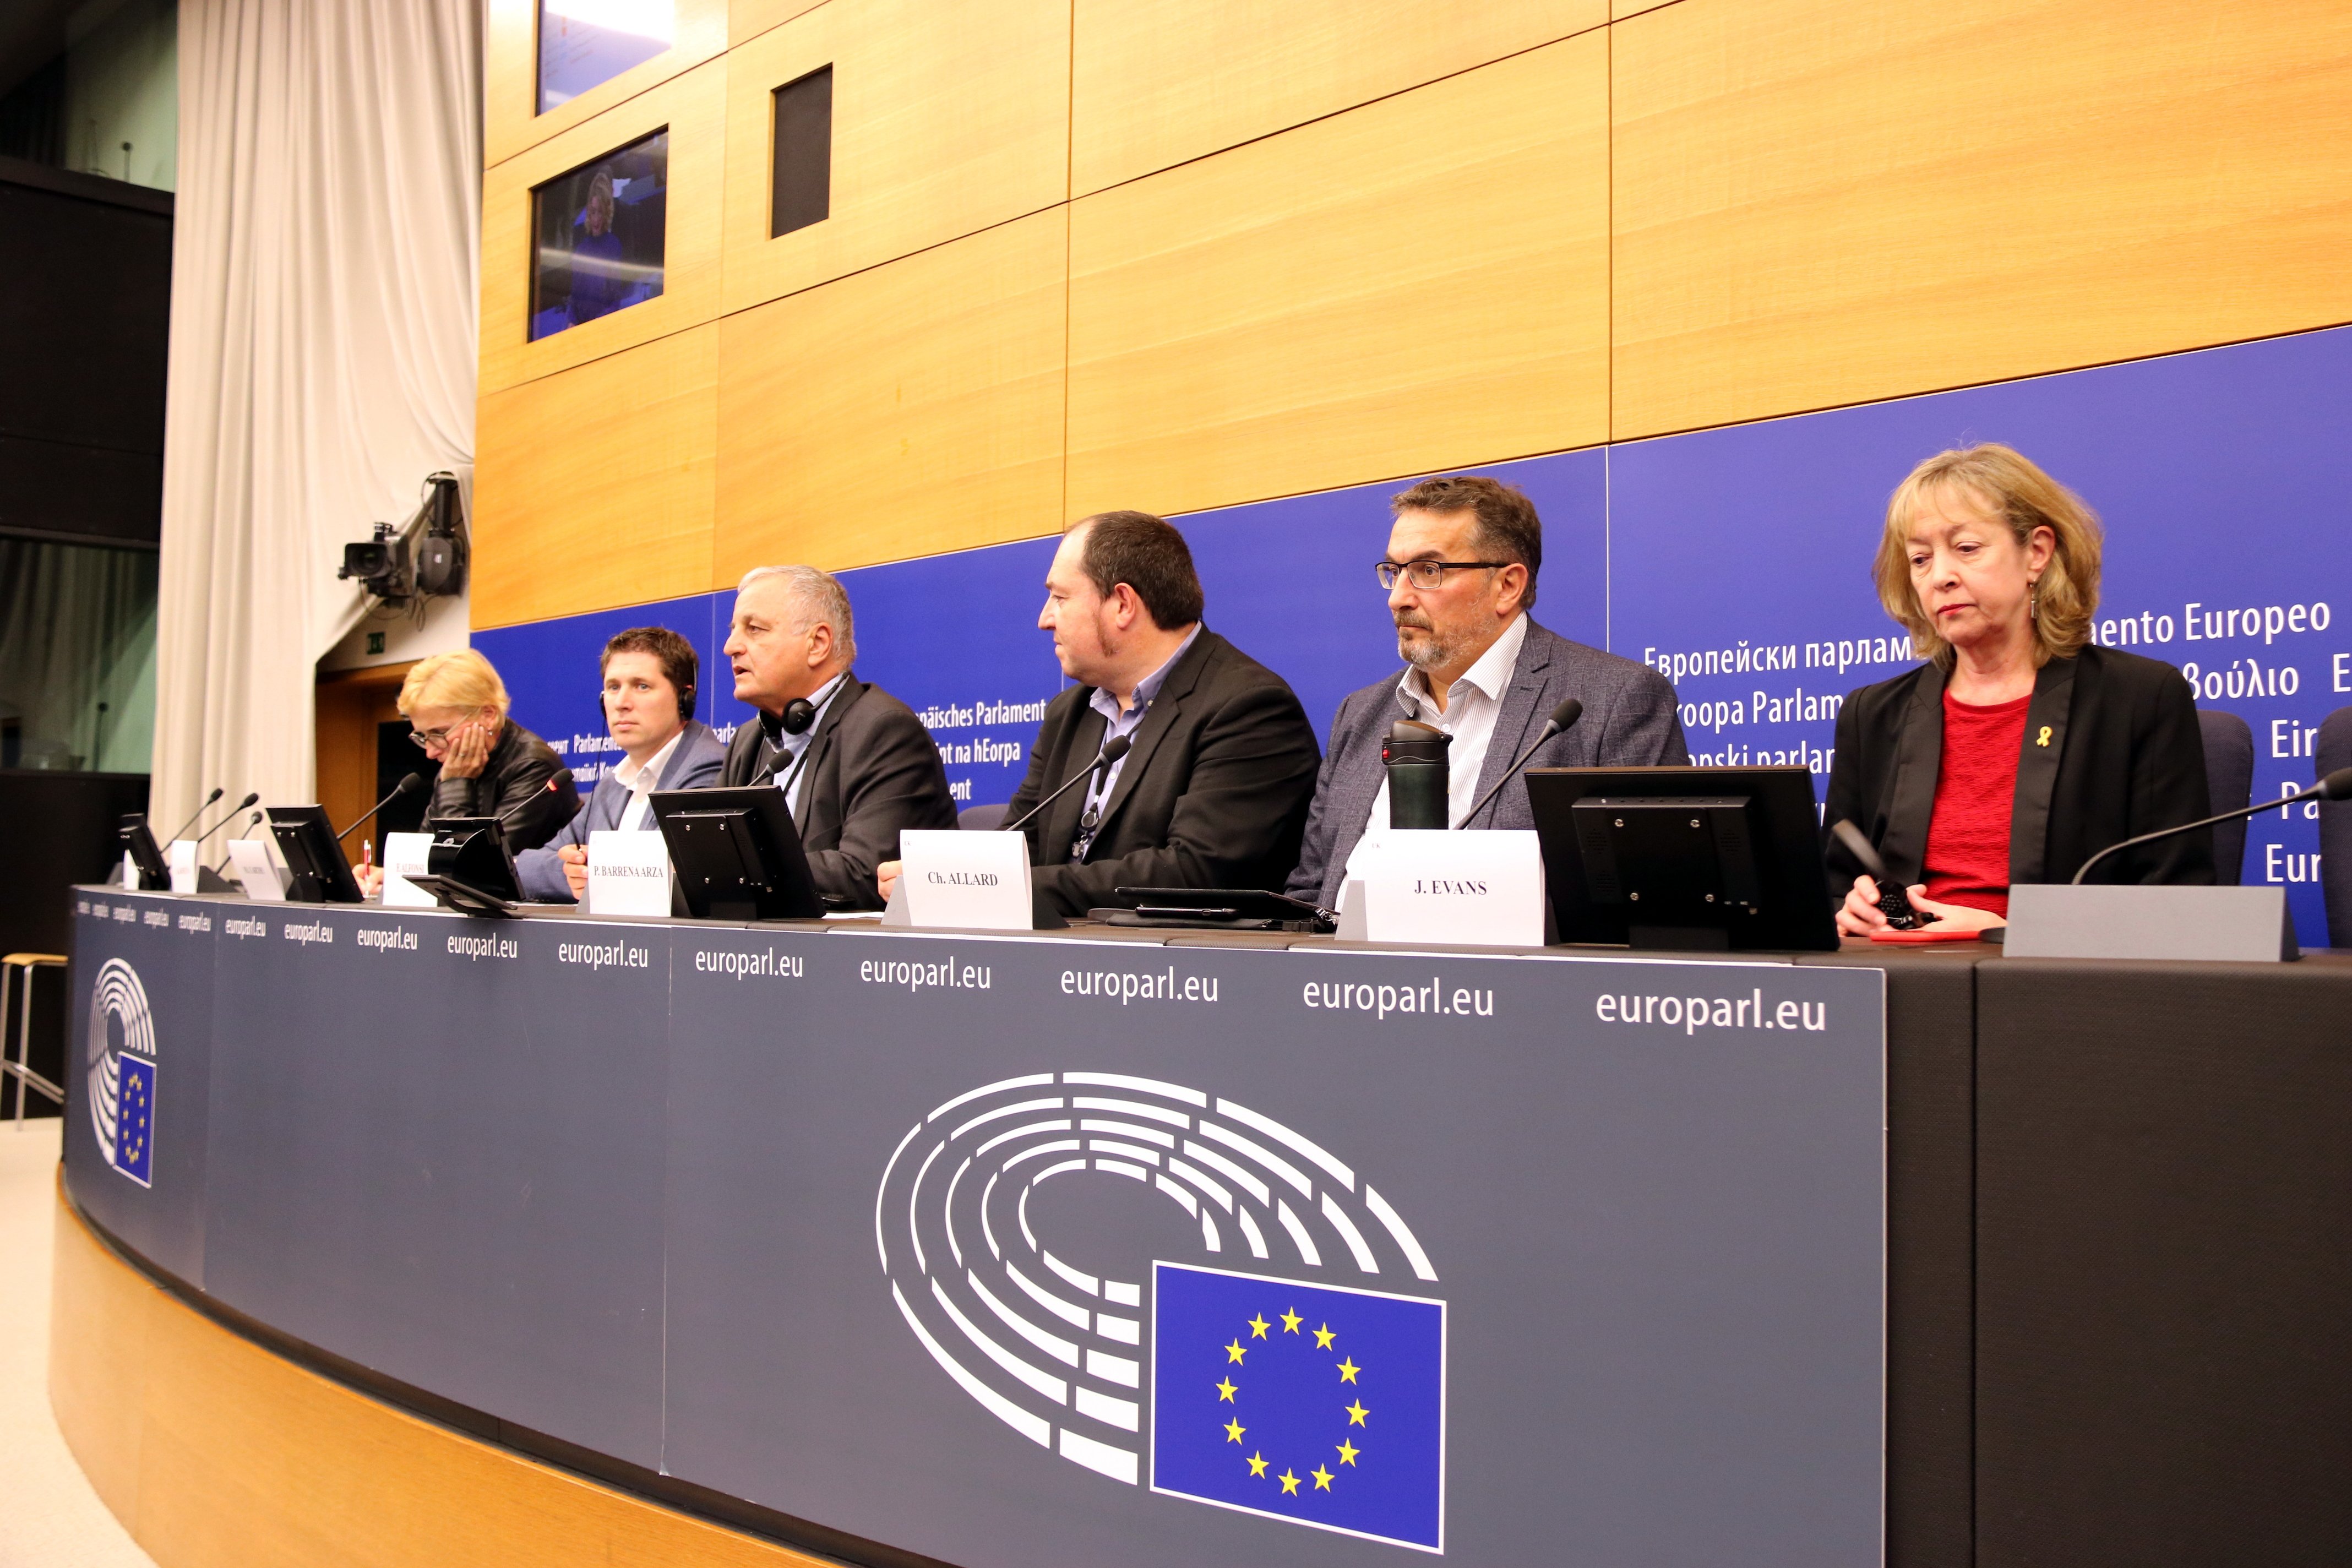 EU-Catalonia Dialogue Platform: "Further repression cannot replace politics"